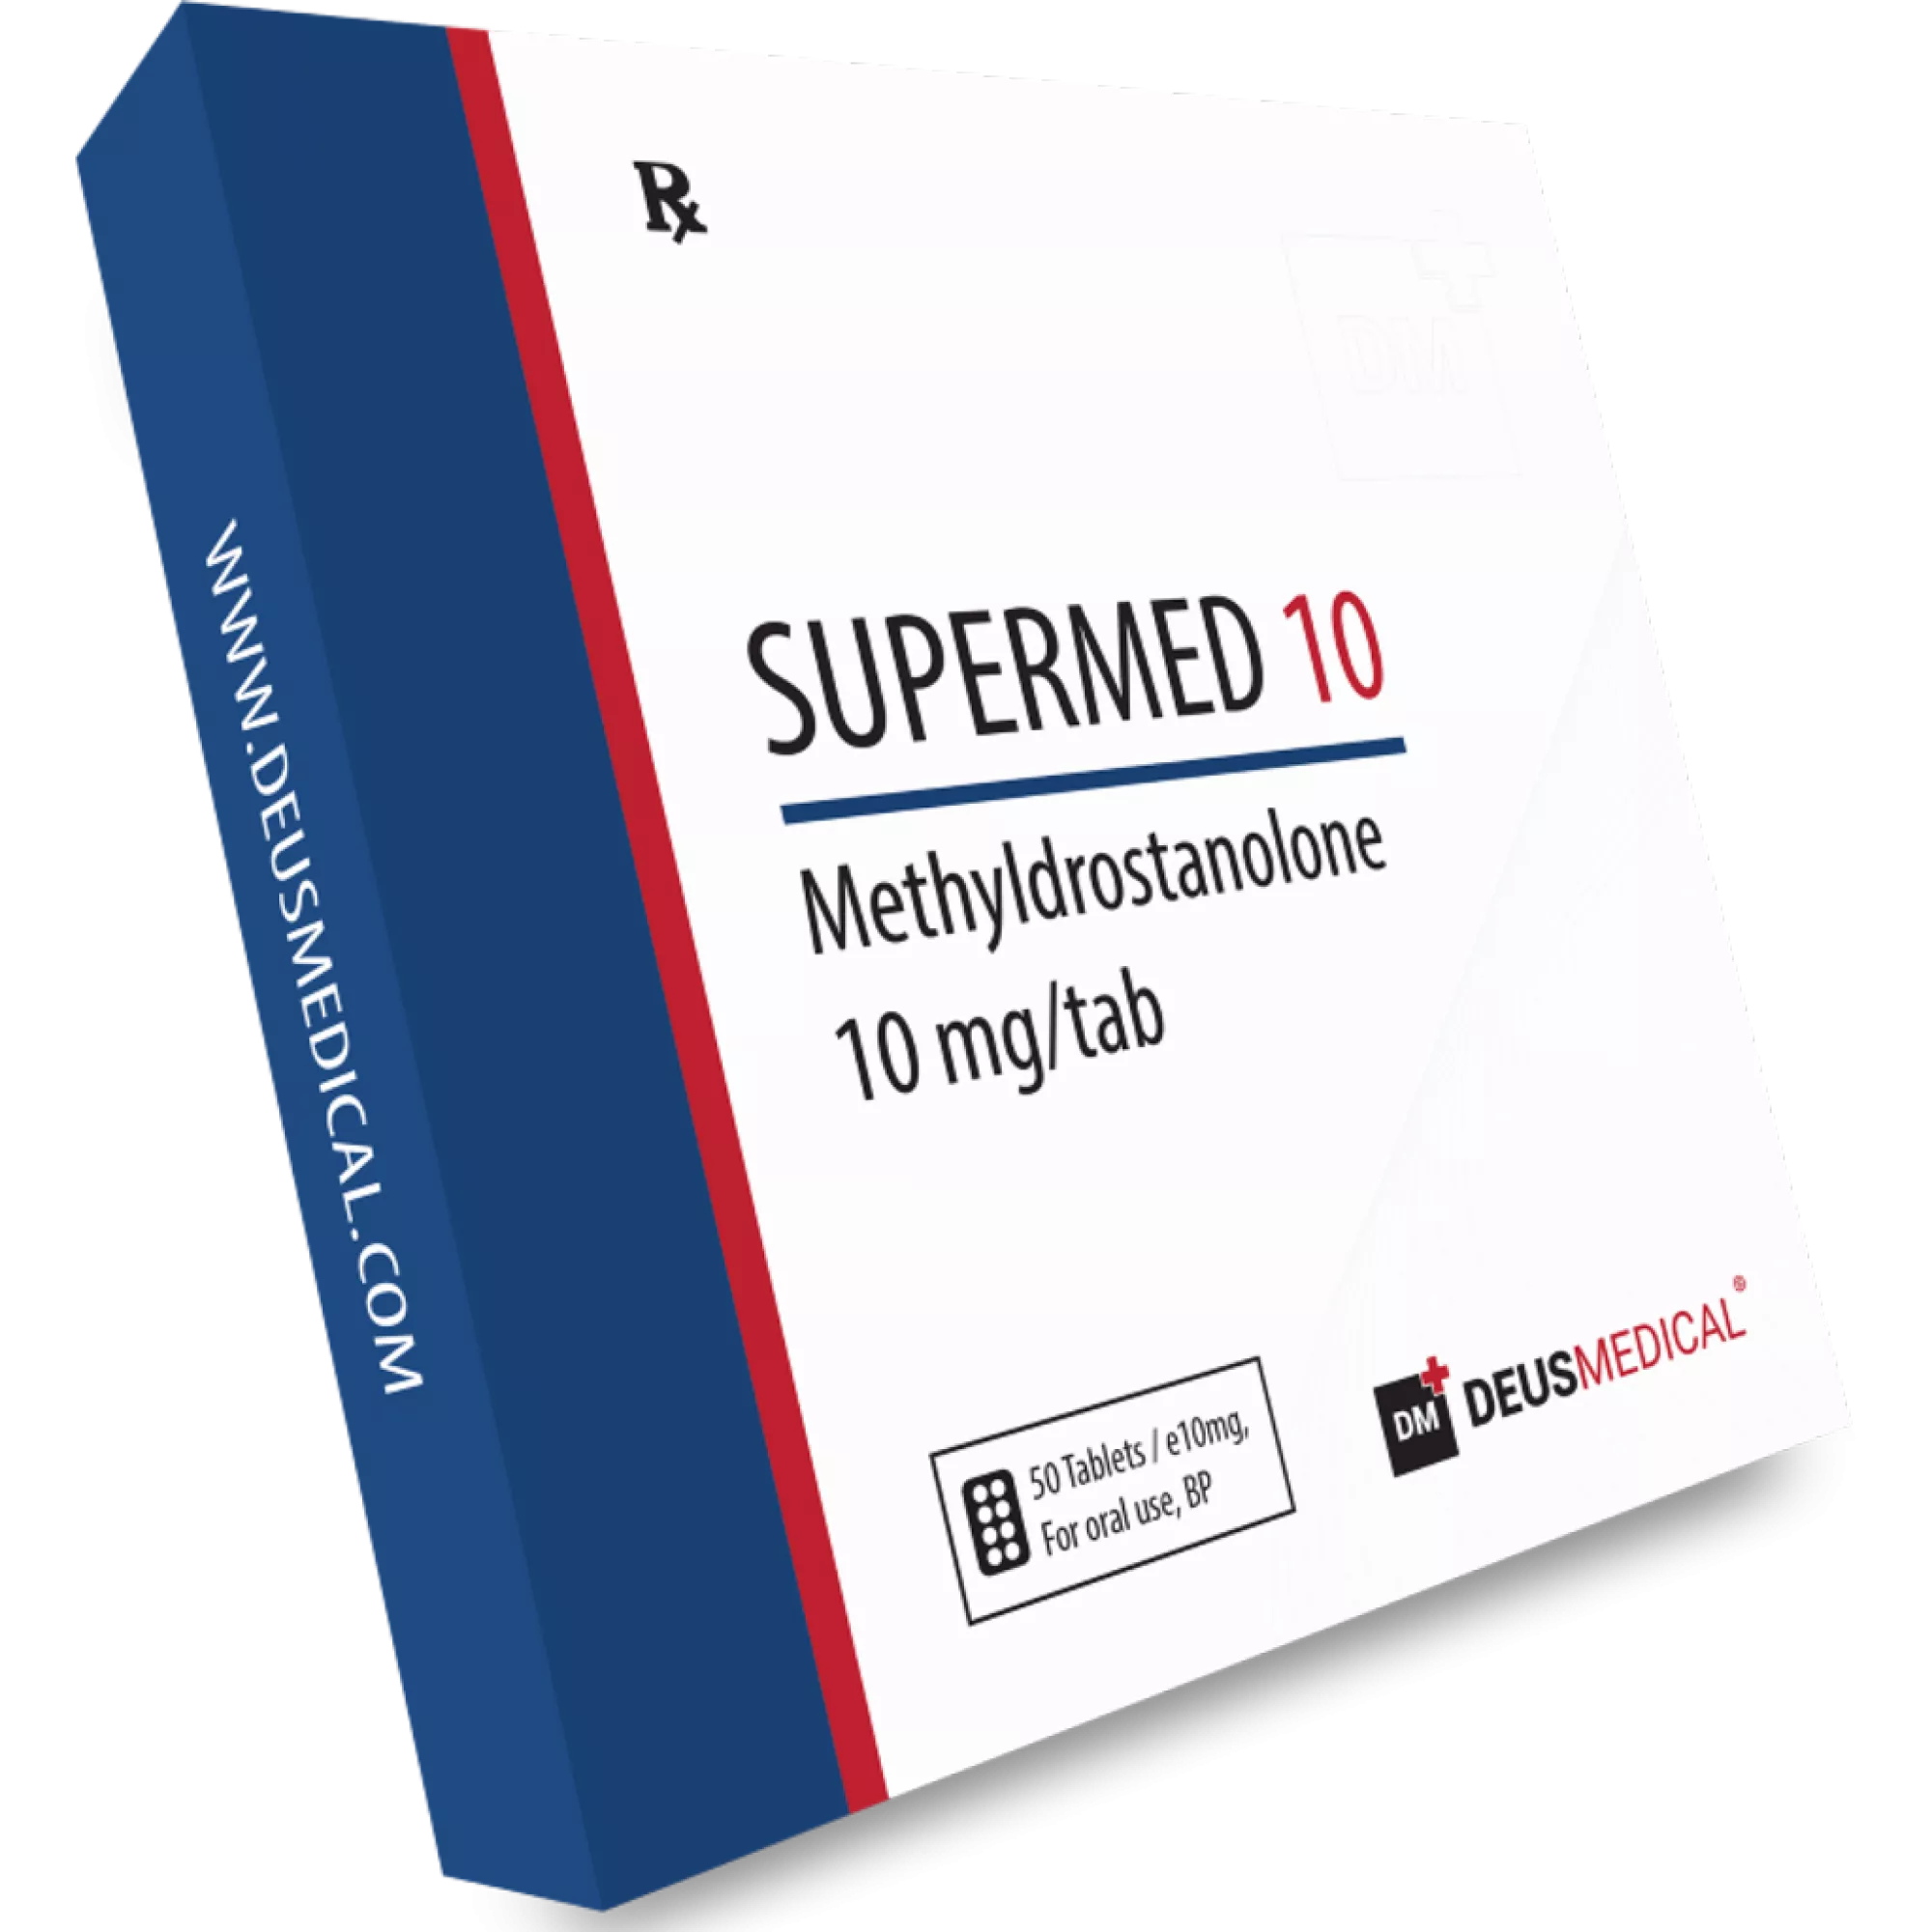 SUPERMED 10 (Methyldrostanolone), Deus Medical, Buy Steroids Online - www.deuspower.shop